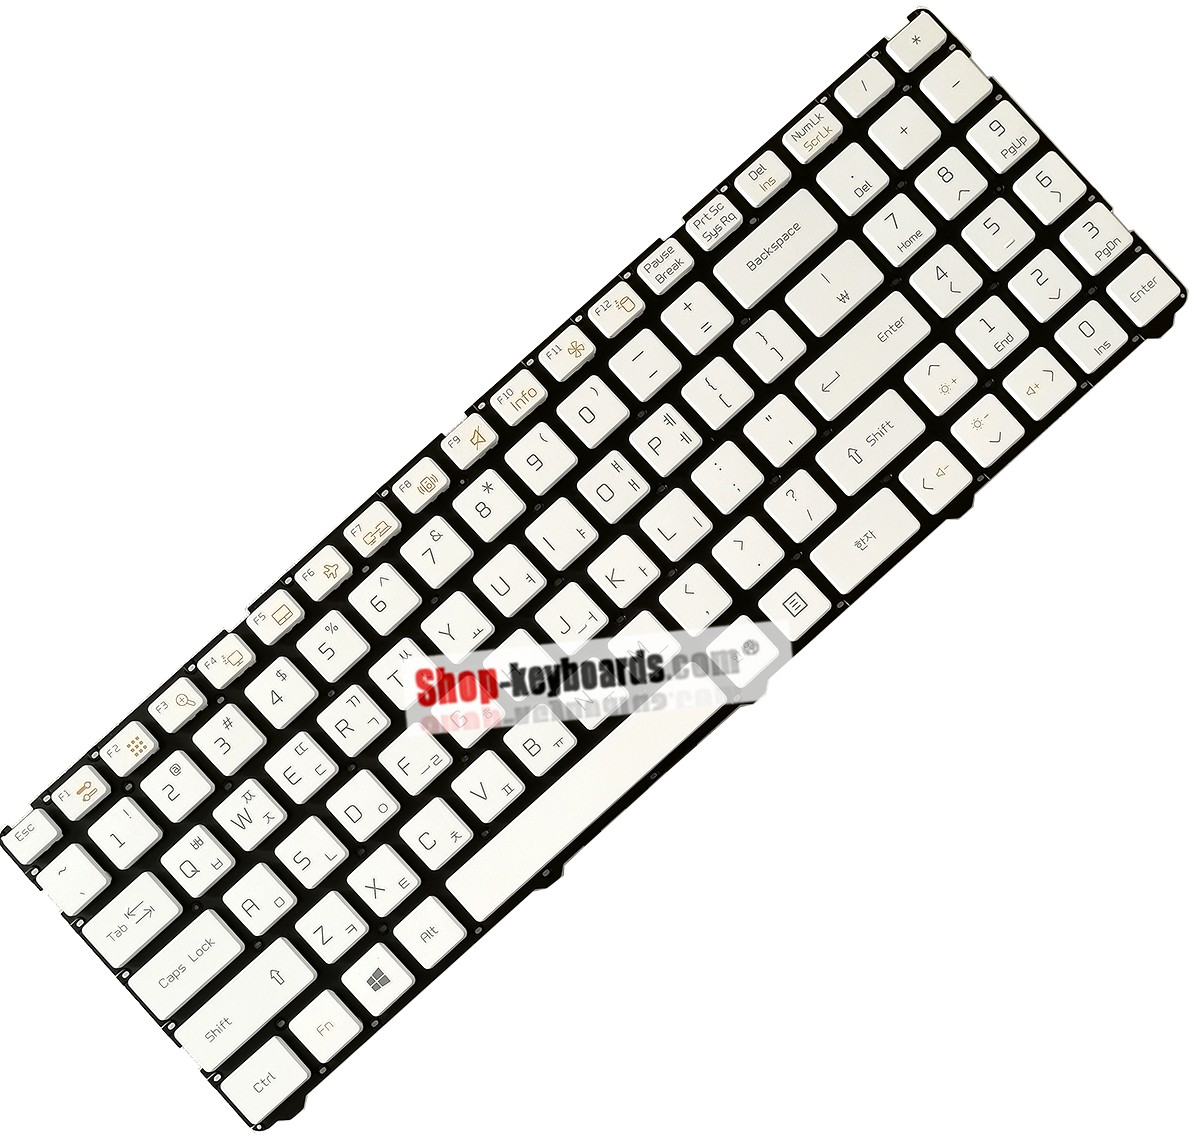 LG MP-12K73IO-9208 Keyboard replacement